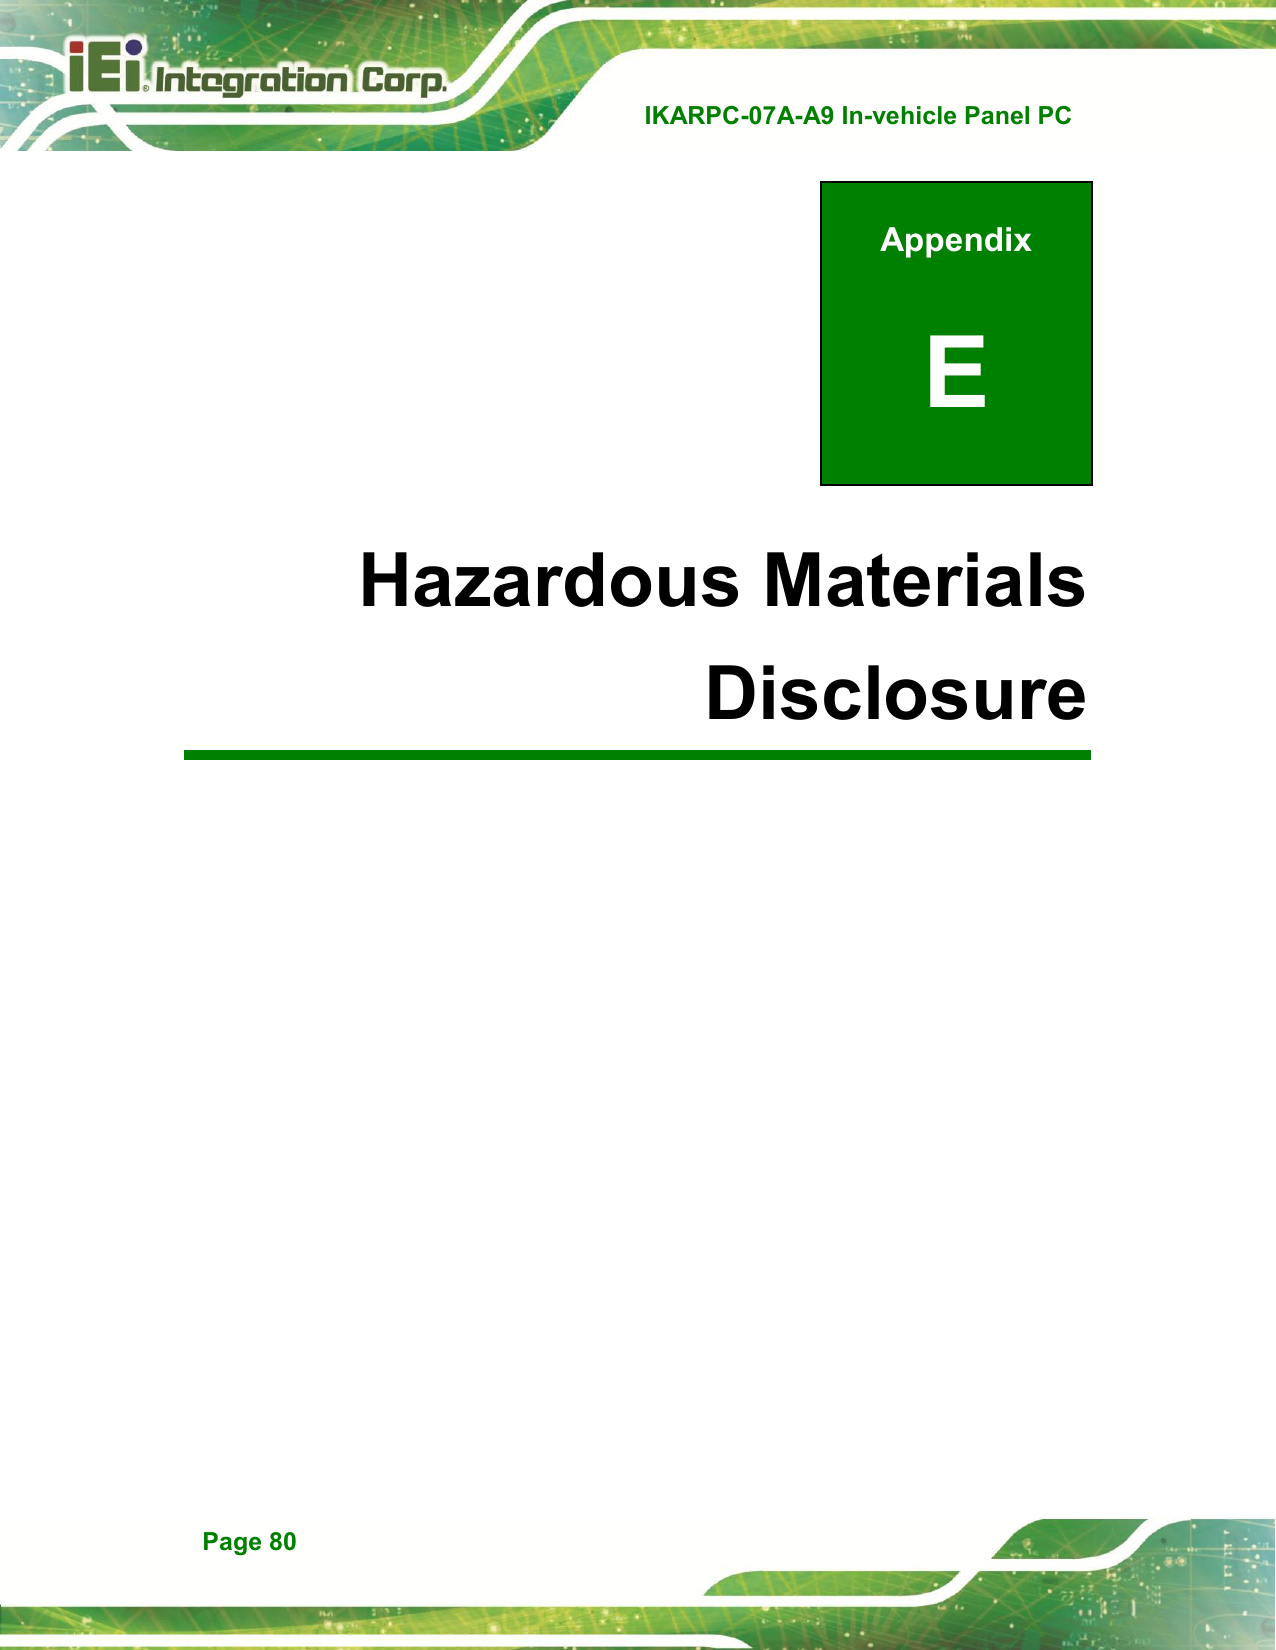   IKARPC-07A-A9 In-vehicle Panel PC  Page 80 Appendix E E Hazardous Materials Disclosure 